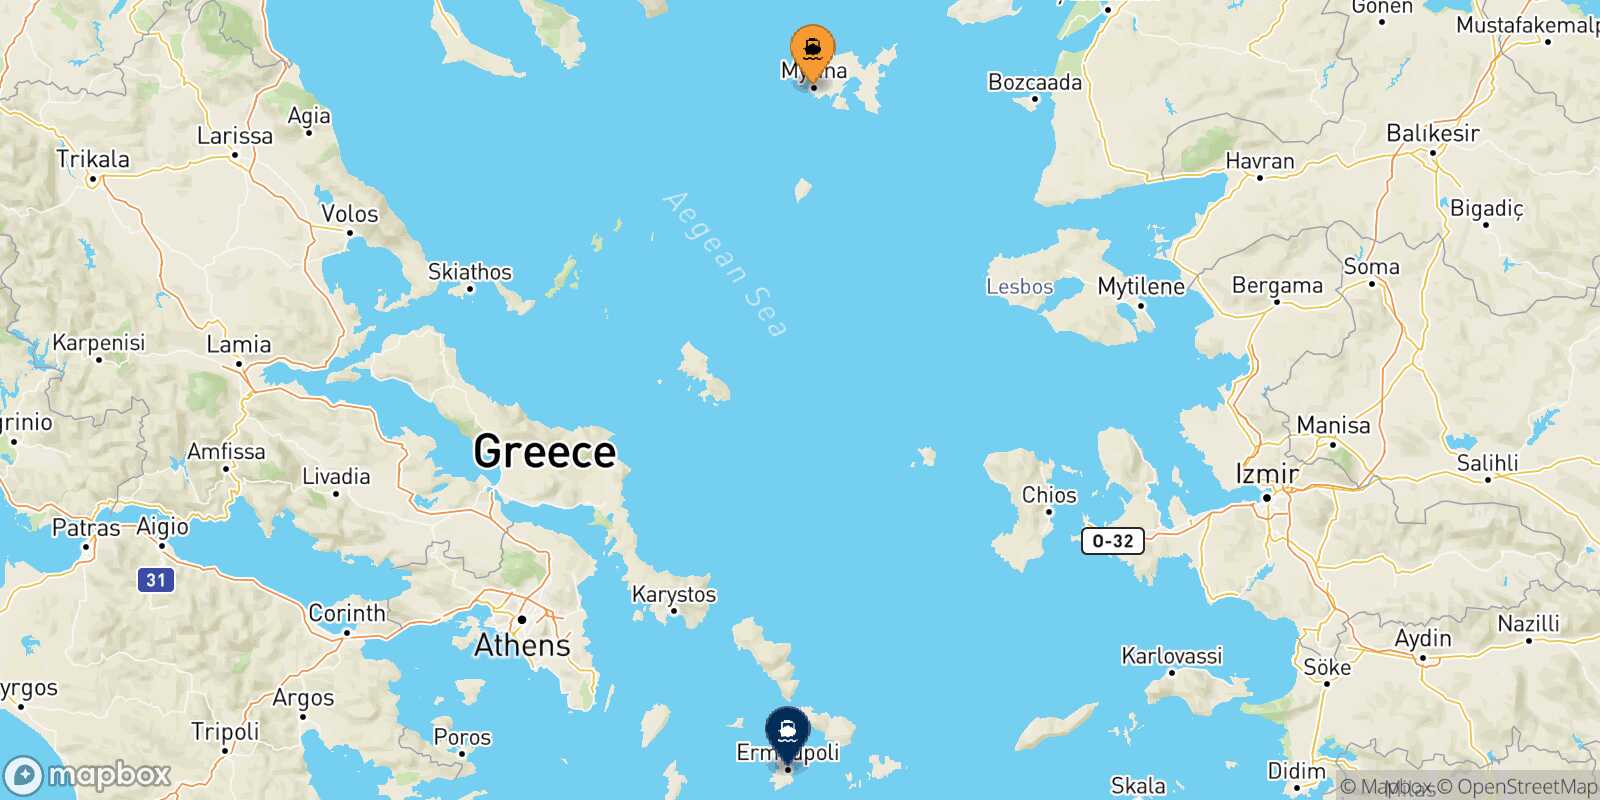 Mapa de la ruta Mirina (Limnos) Syros